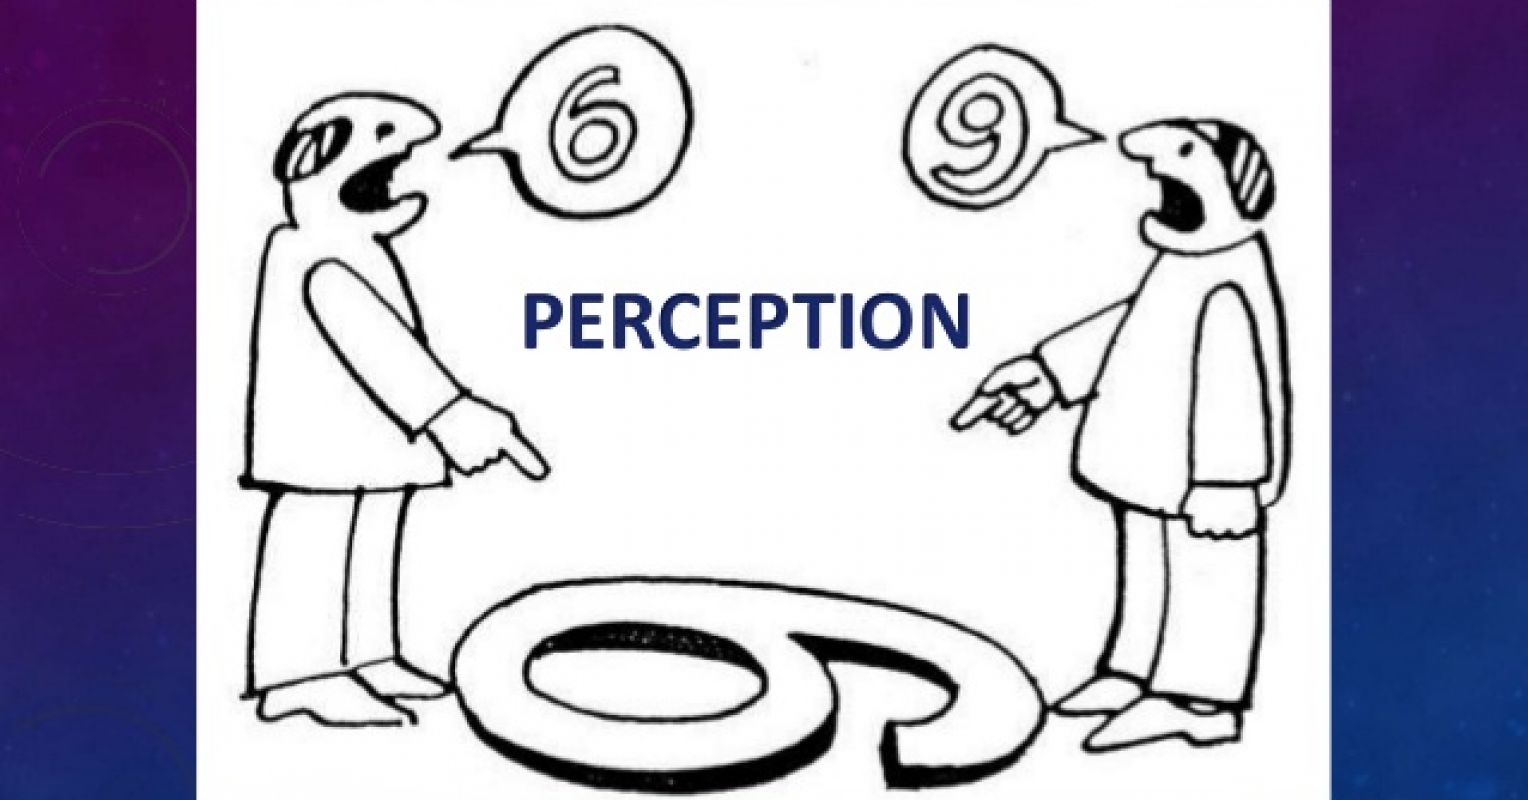 subjective perception definition